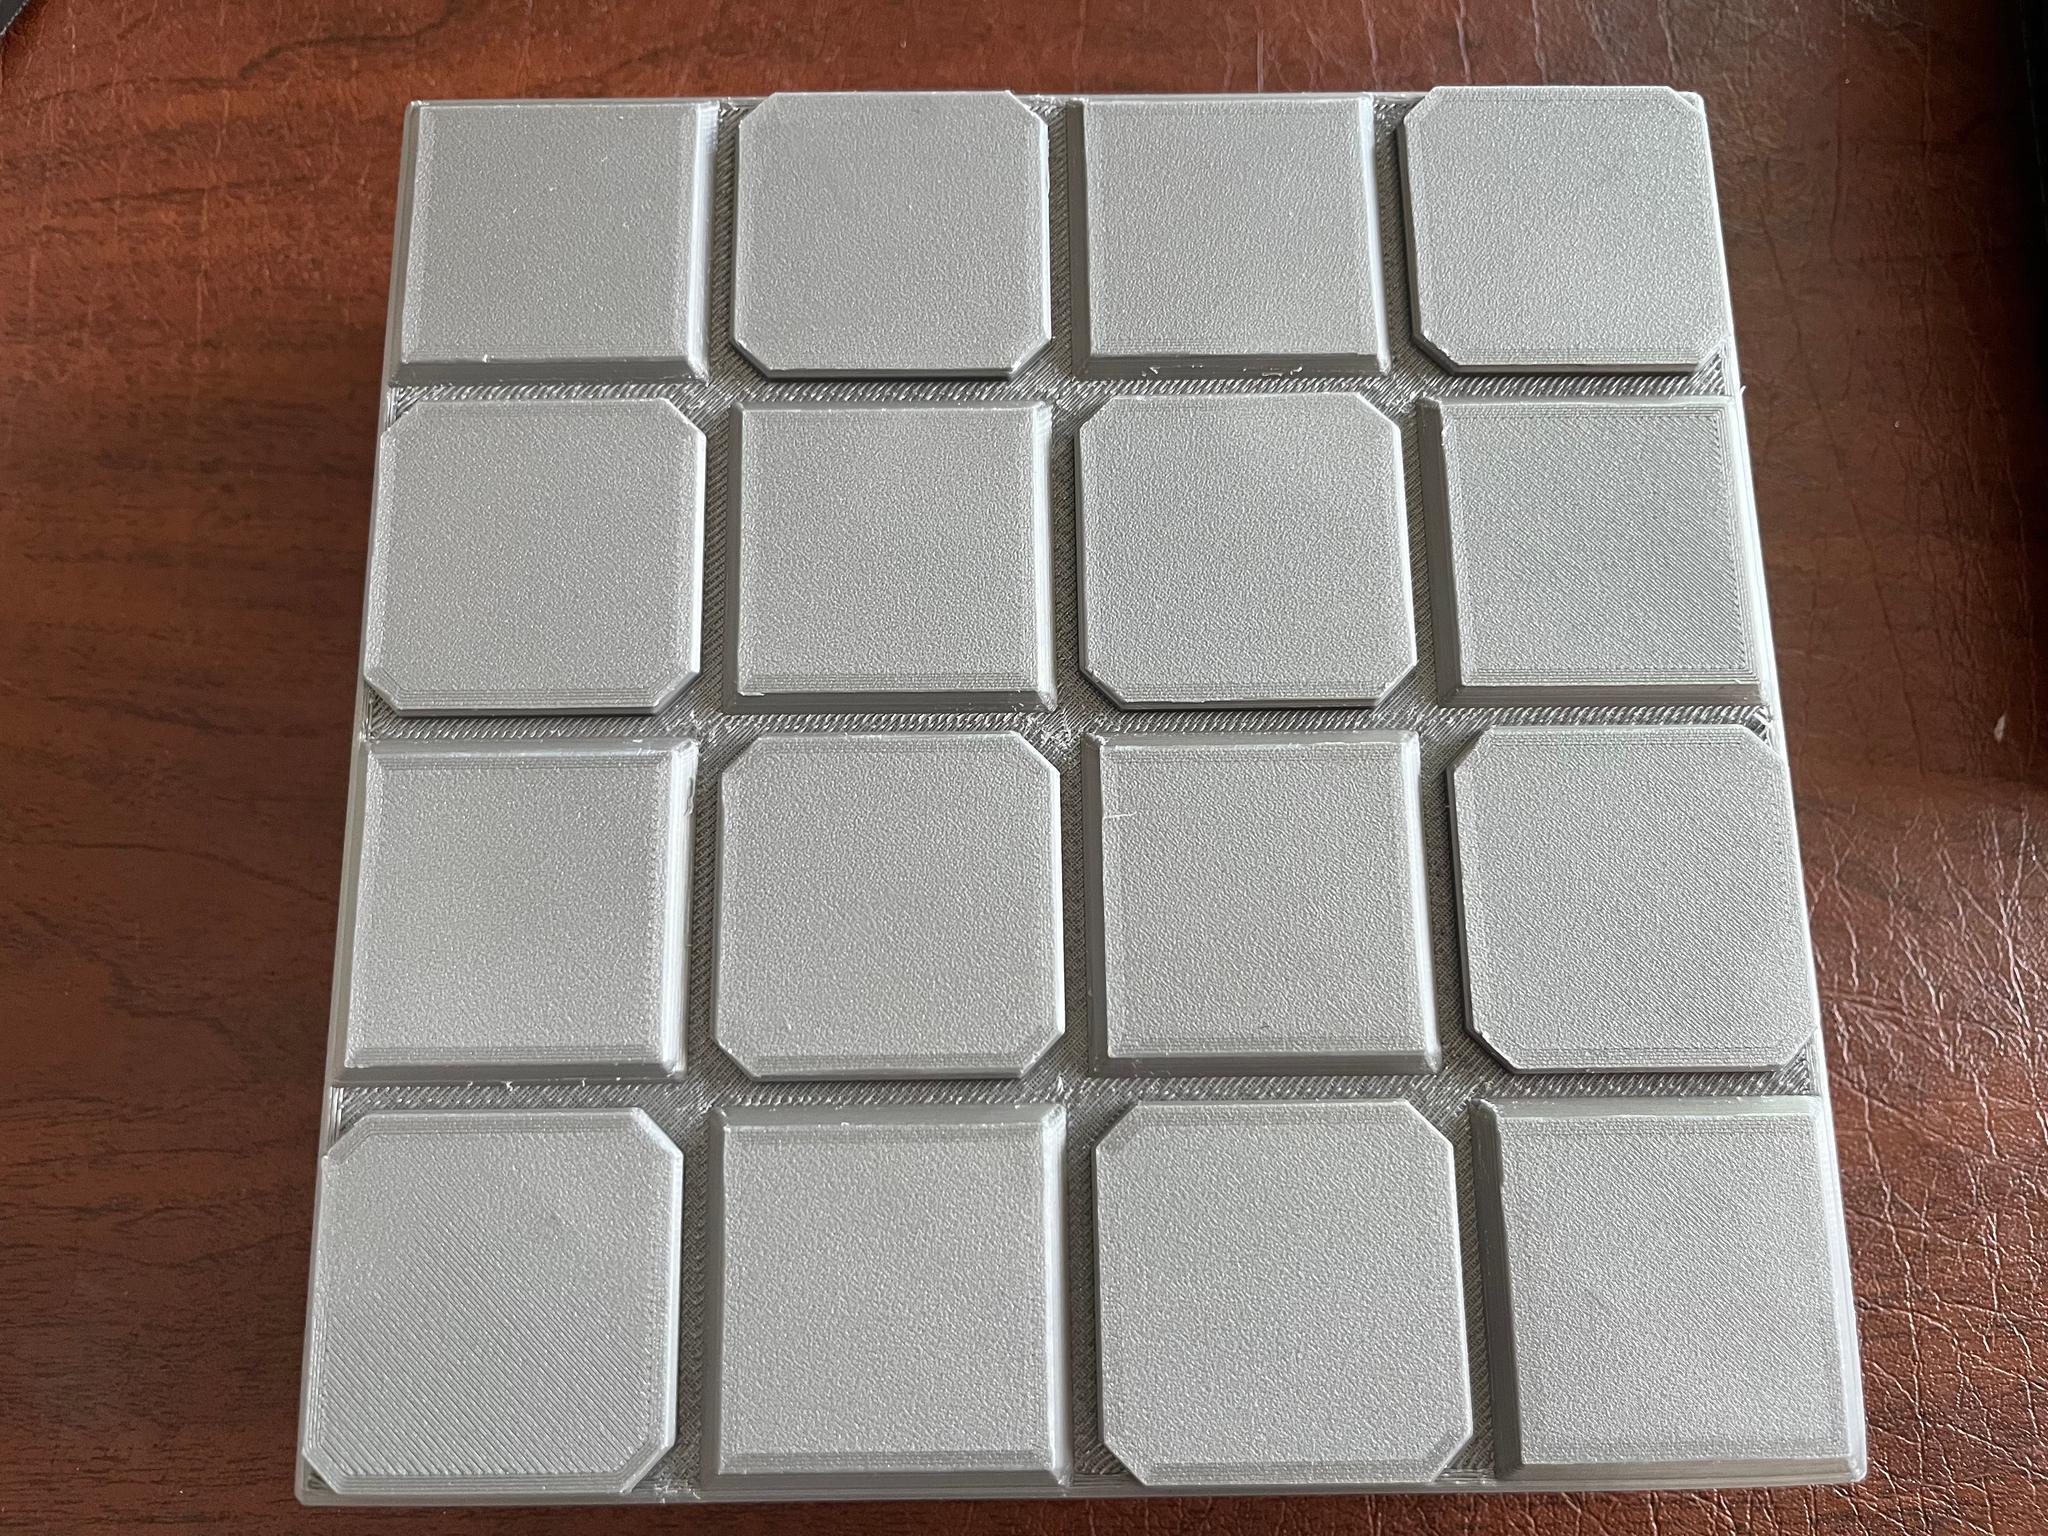 Checkerboard pattern on case bottom for chessboard corner.